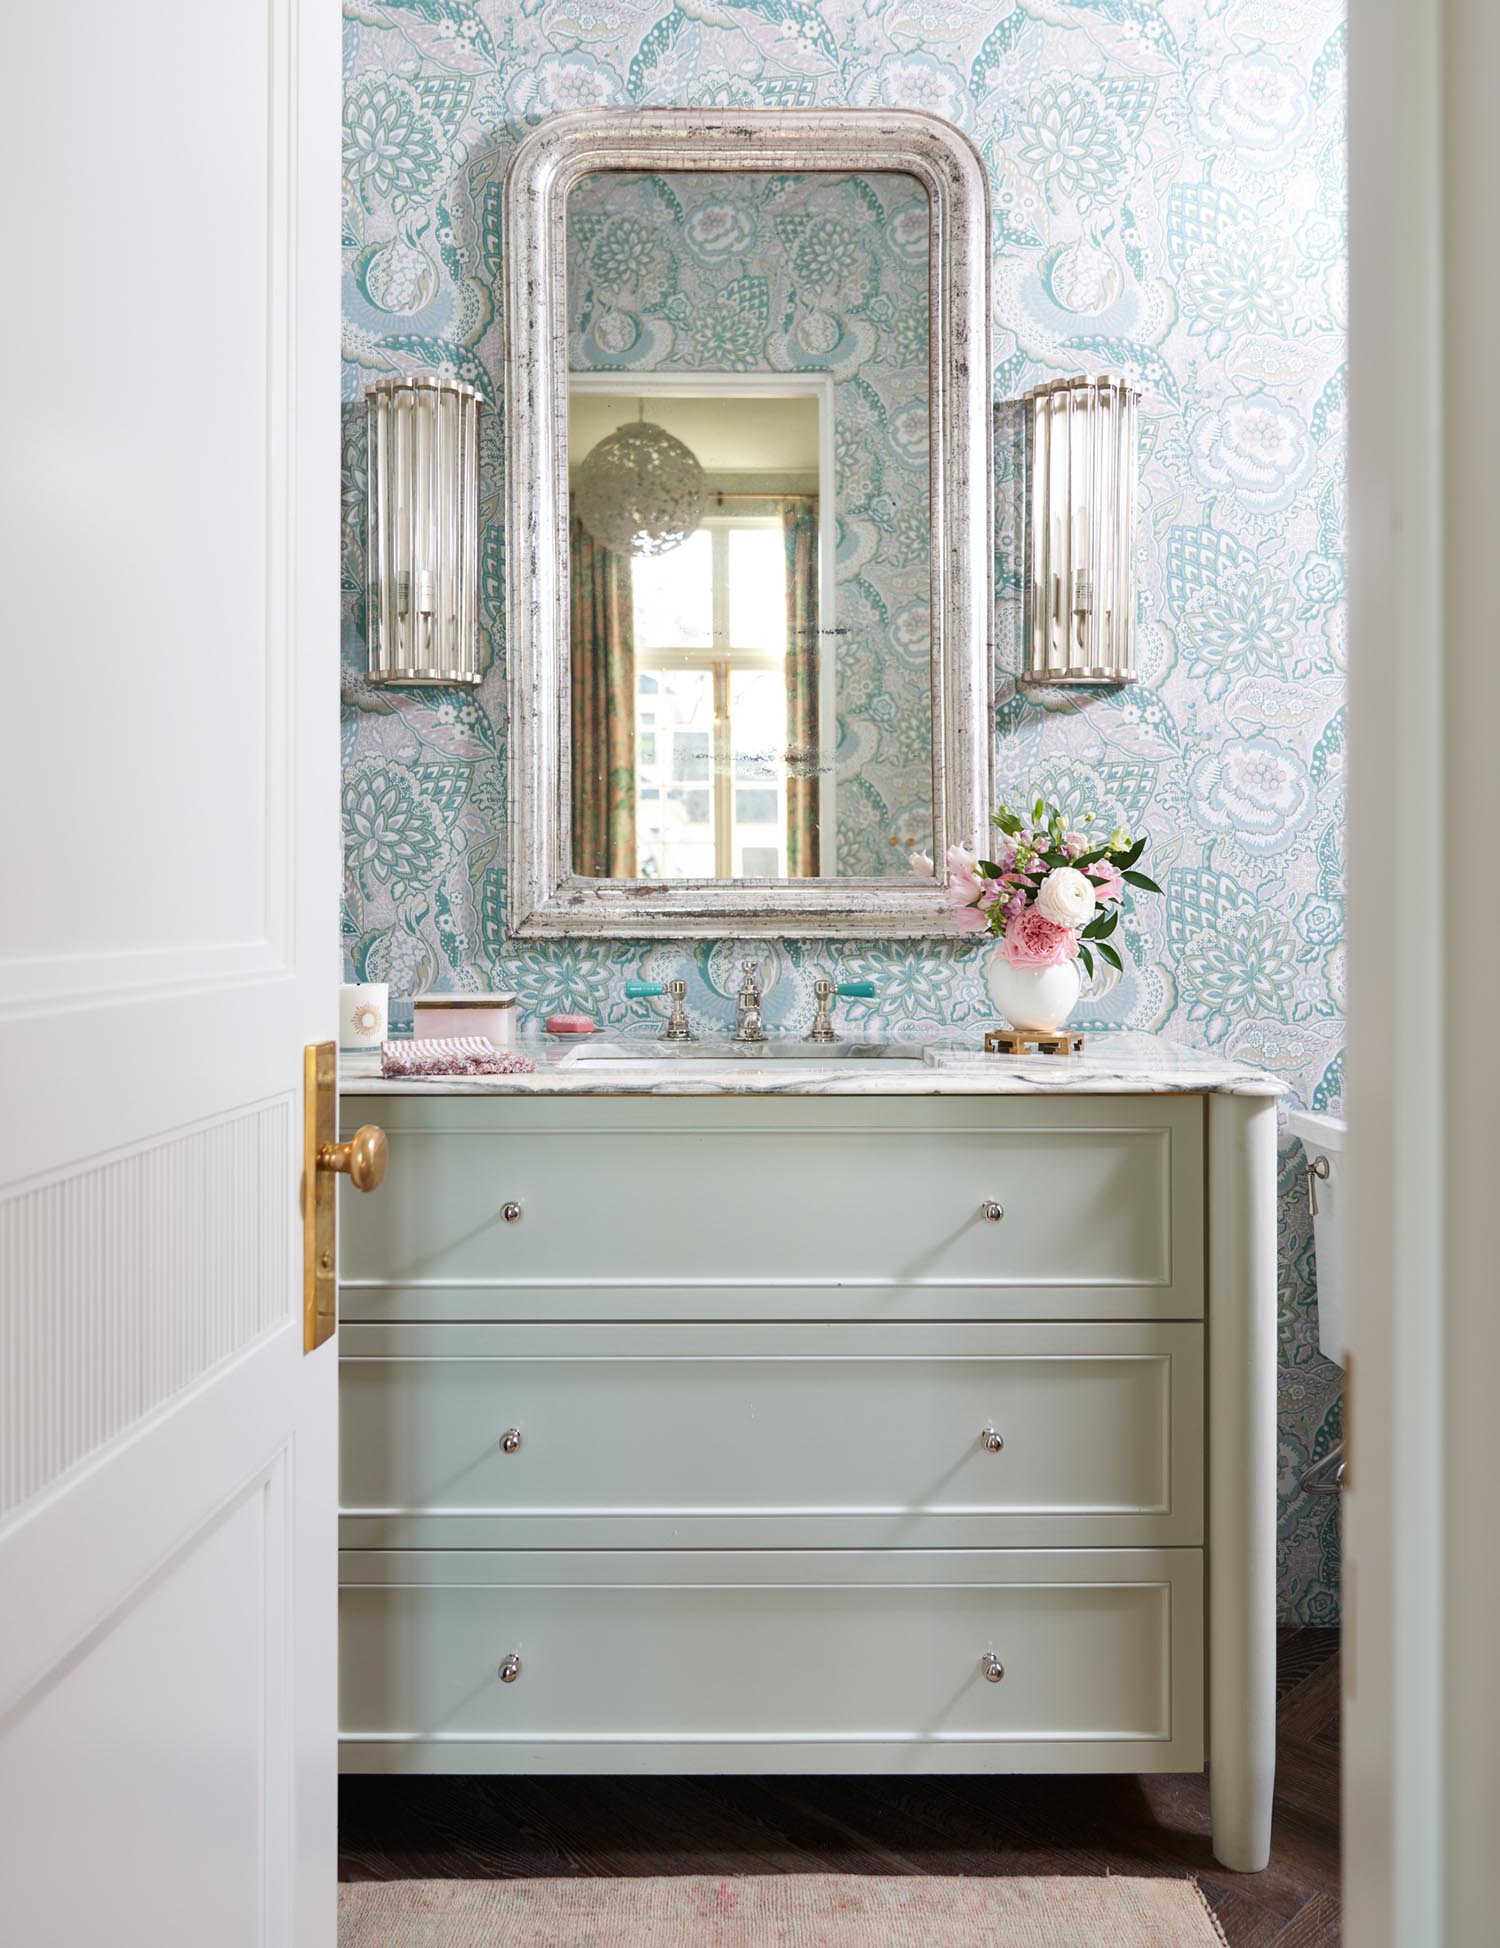 A bathroom has light blue wallpaper and a pastel teal dresser sink.